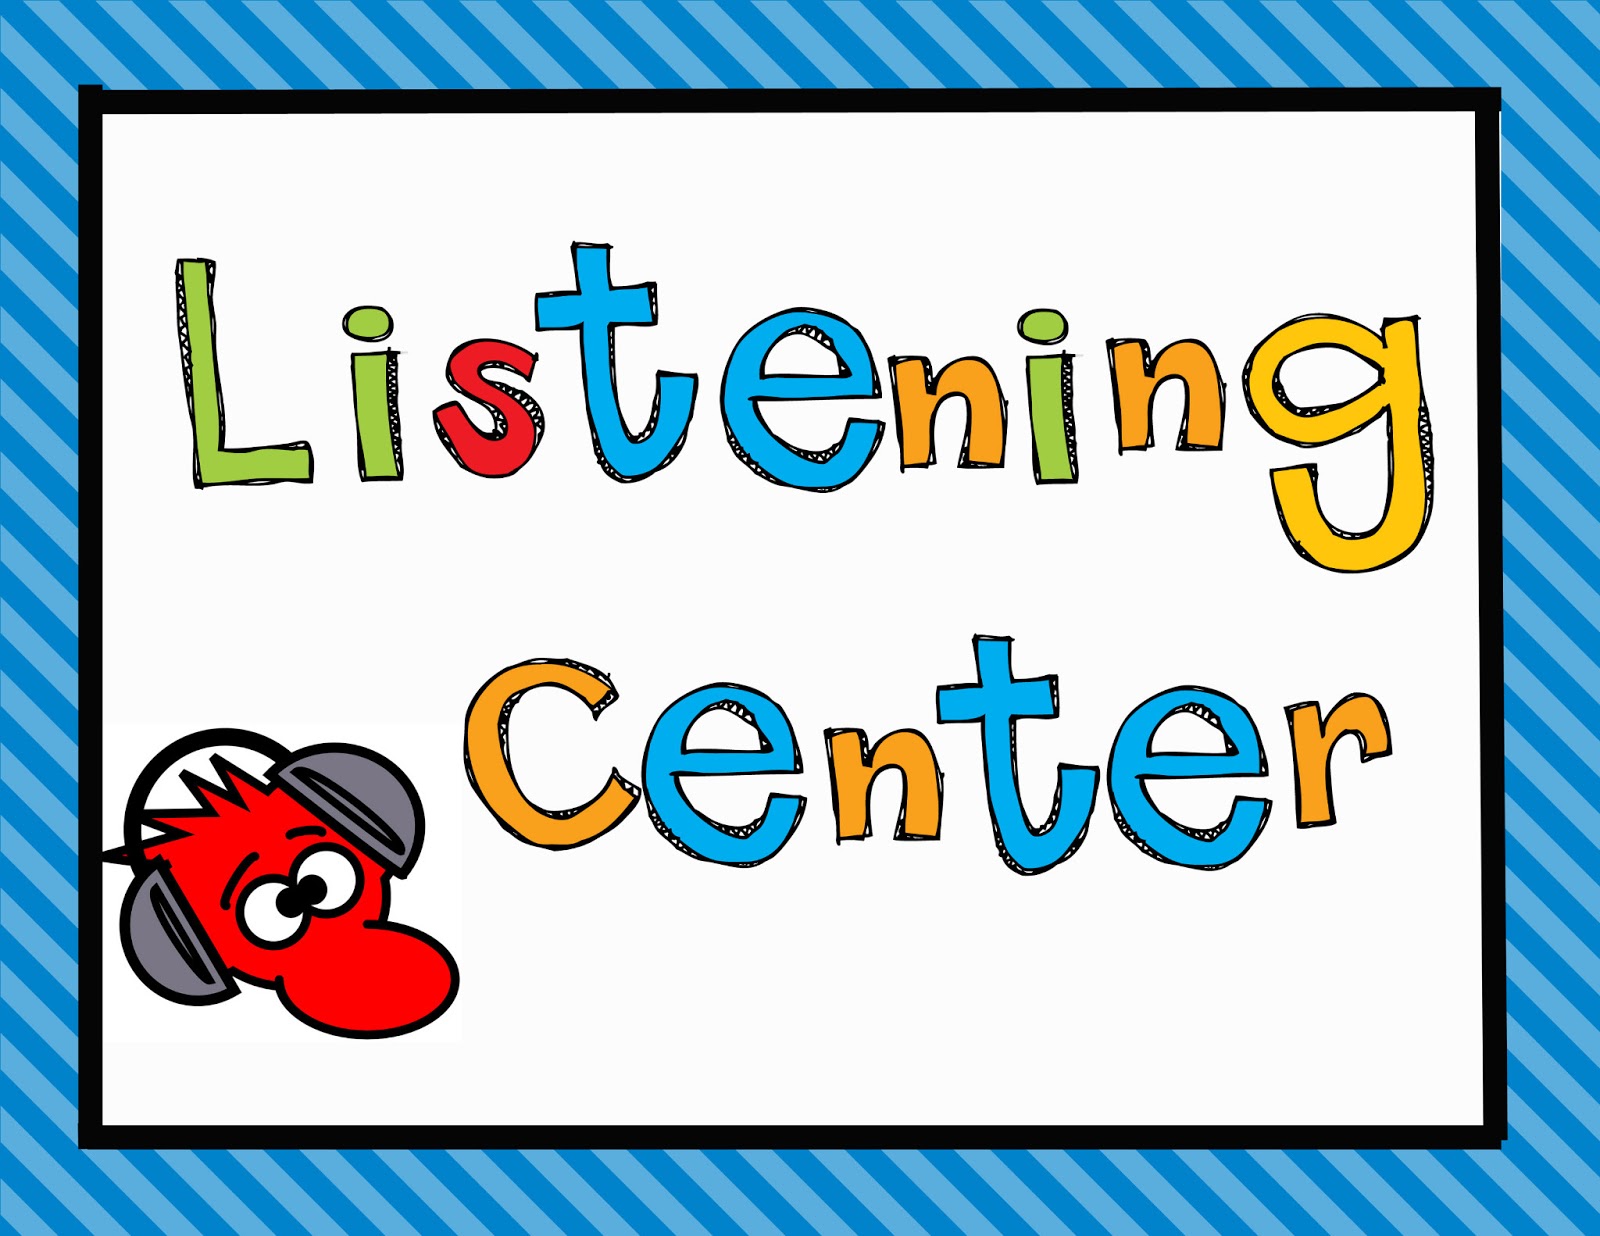 Listening Center Clipart Free Download Clip Art.